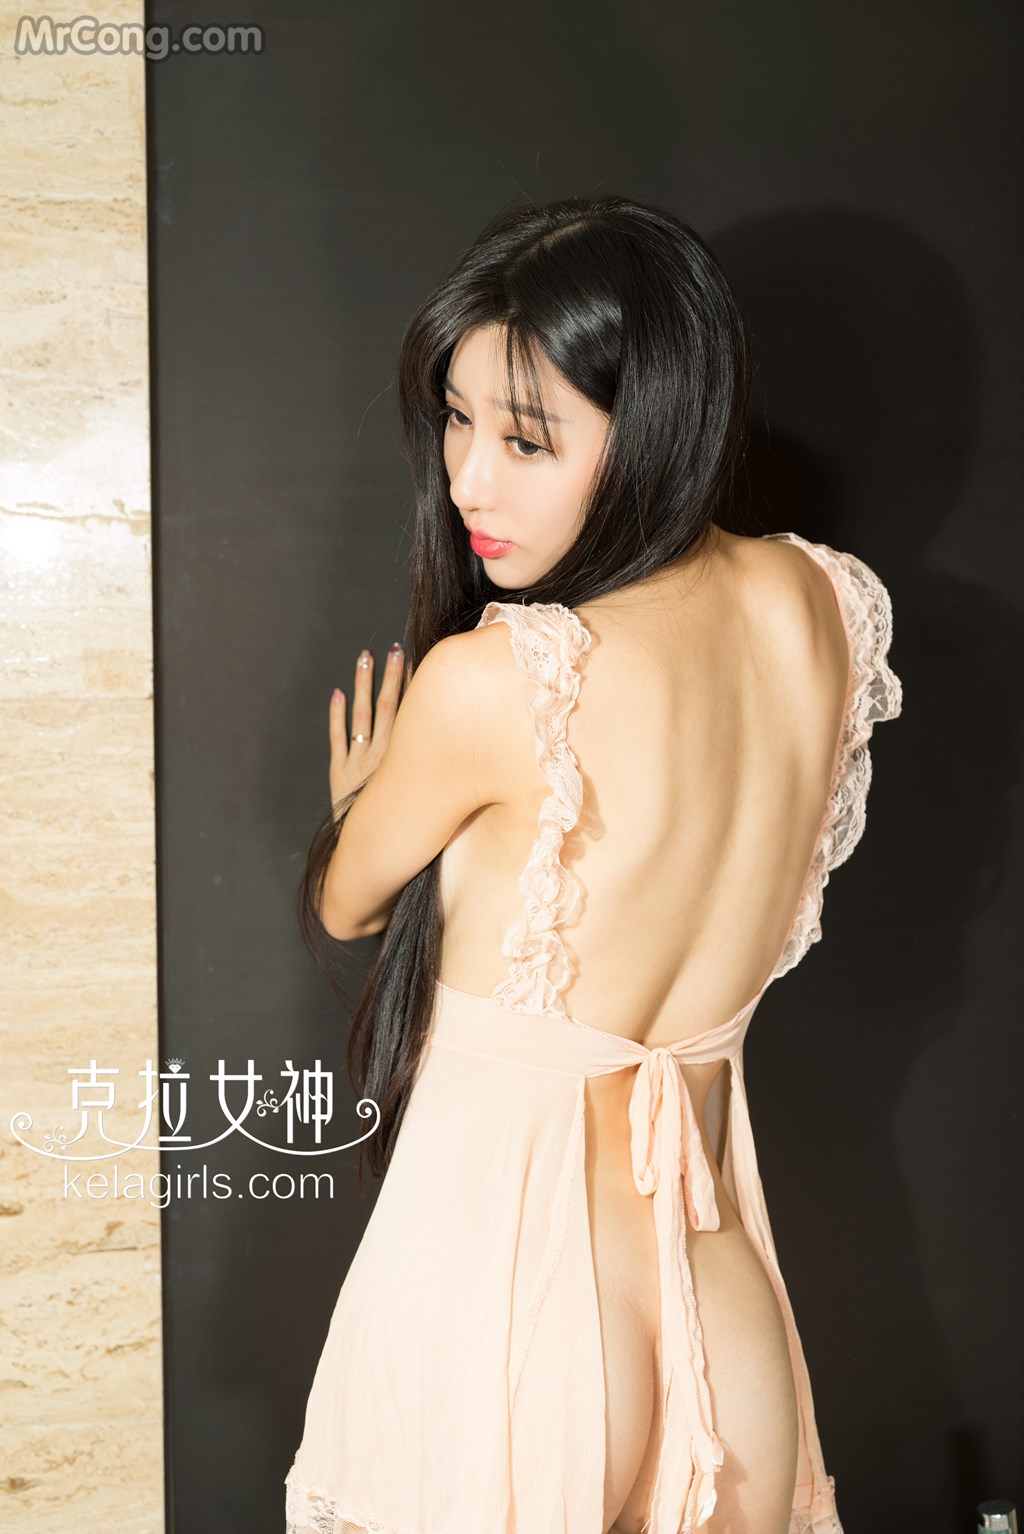 KelaGirls 2017-04-29: Model Wu Qian Qian (吴倩倩) (26 photos)